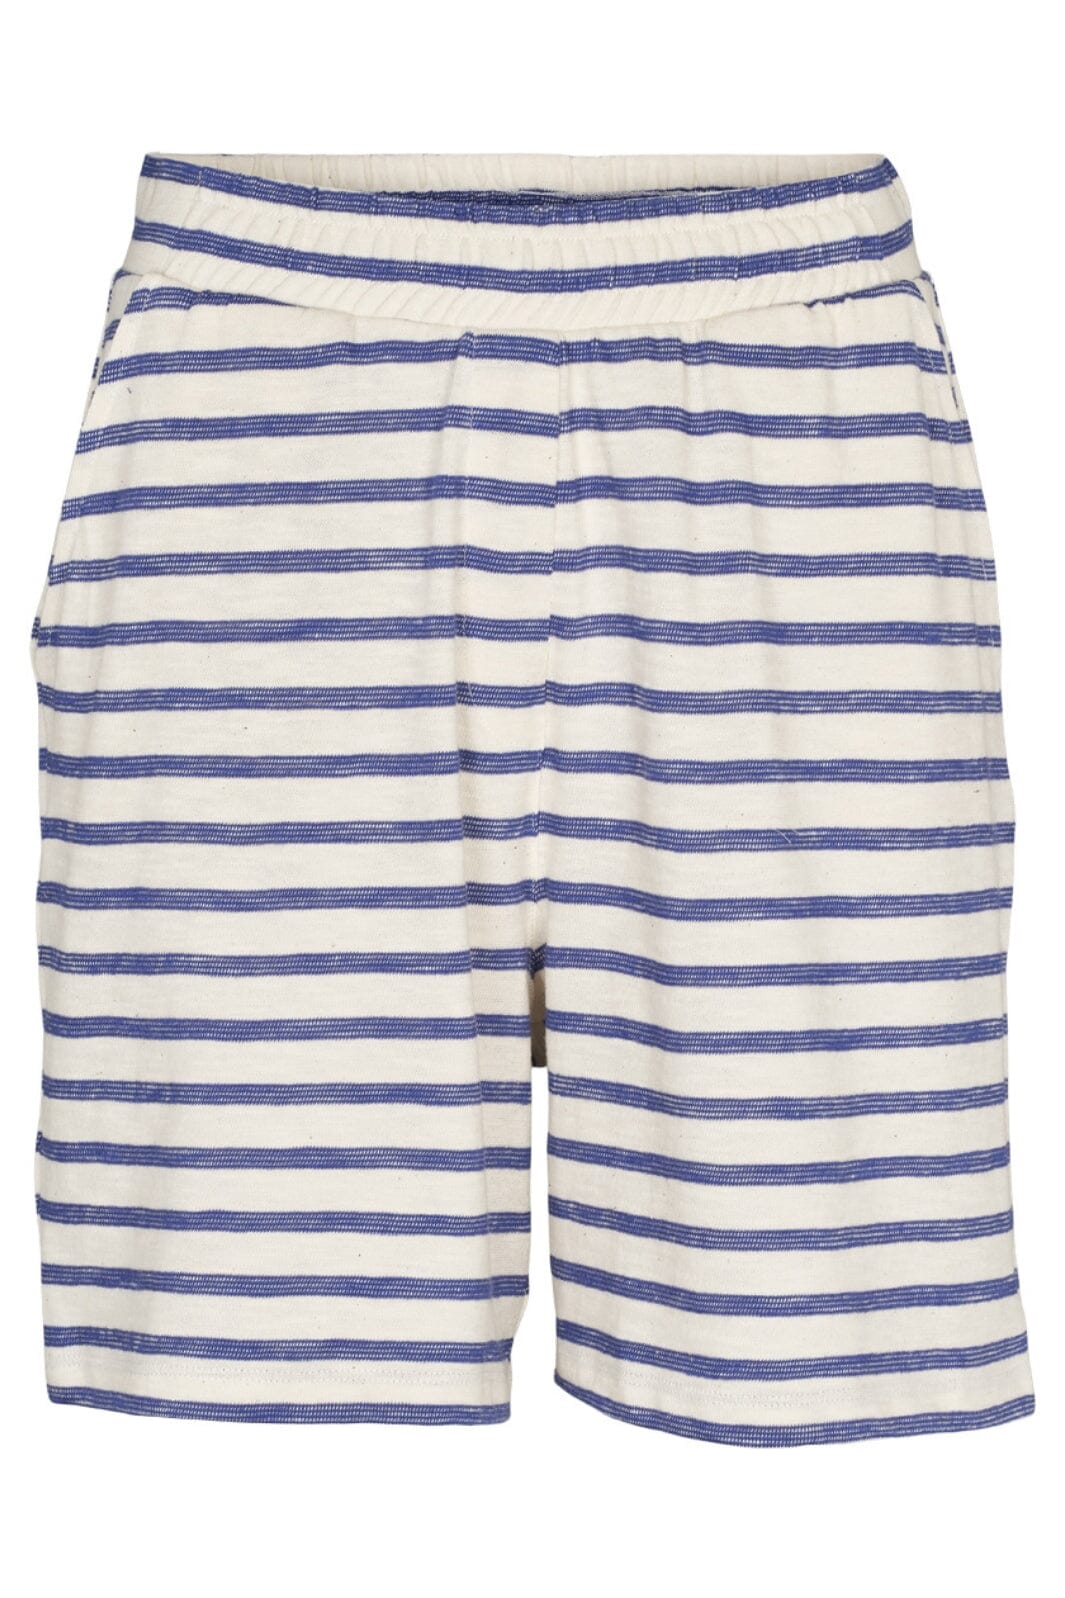 Basic Apparel - Mary Shorts - 688 Birch / Classic Blue Shorts 